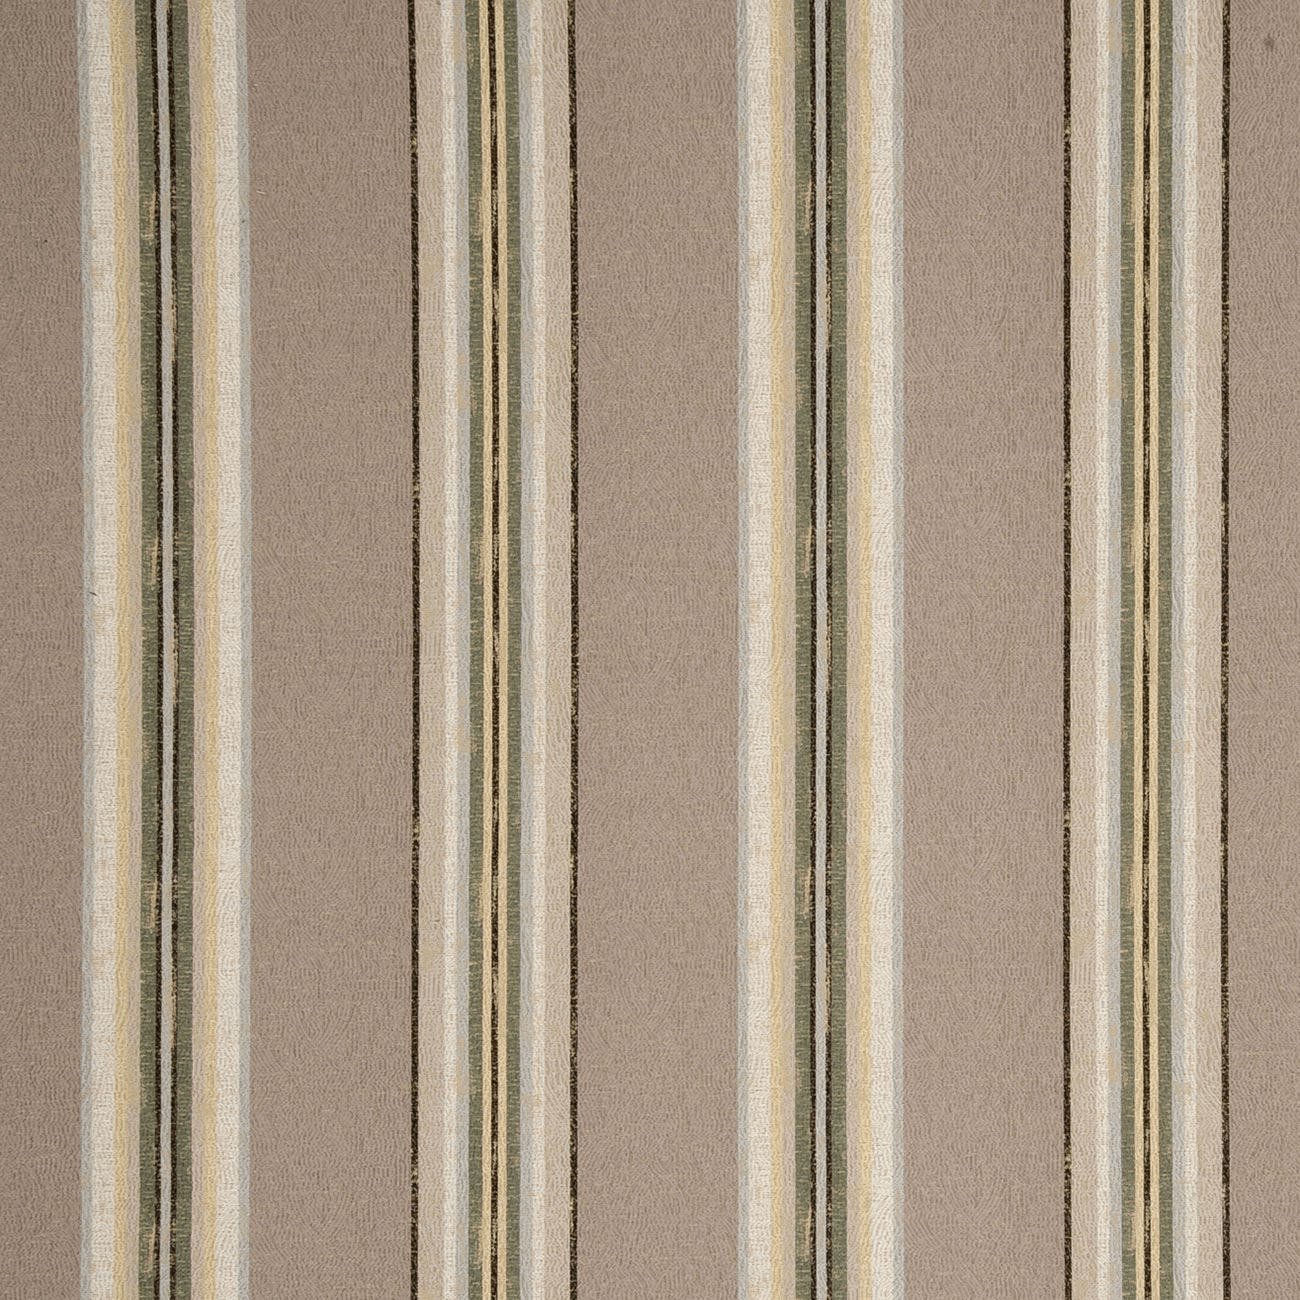 Hattusa Fabric - Cinder - By Clarke and Clarke - F0797/05